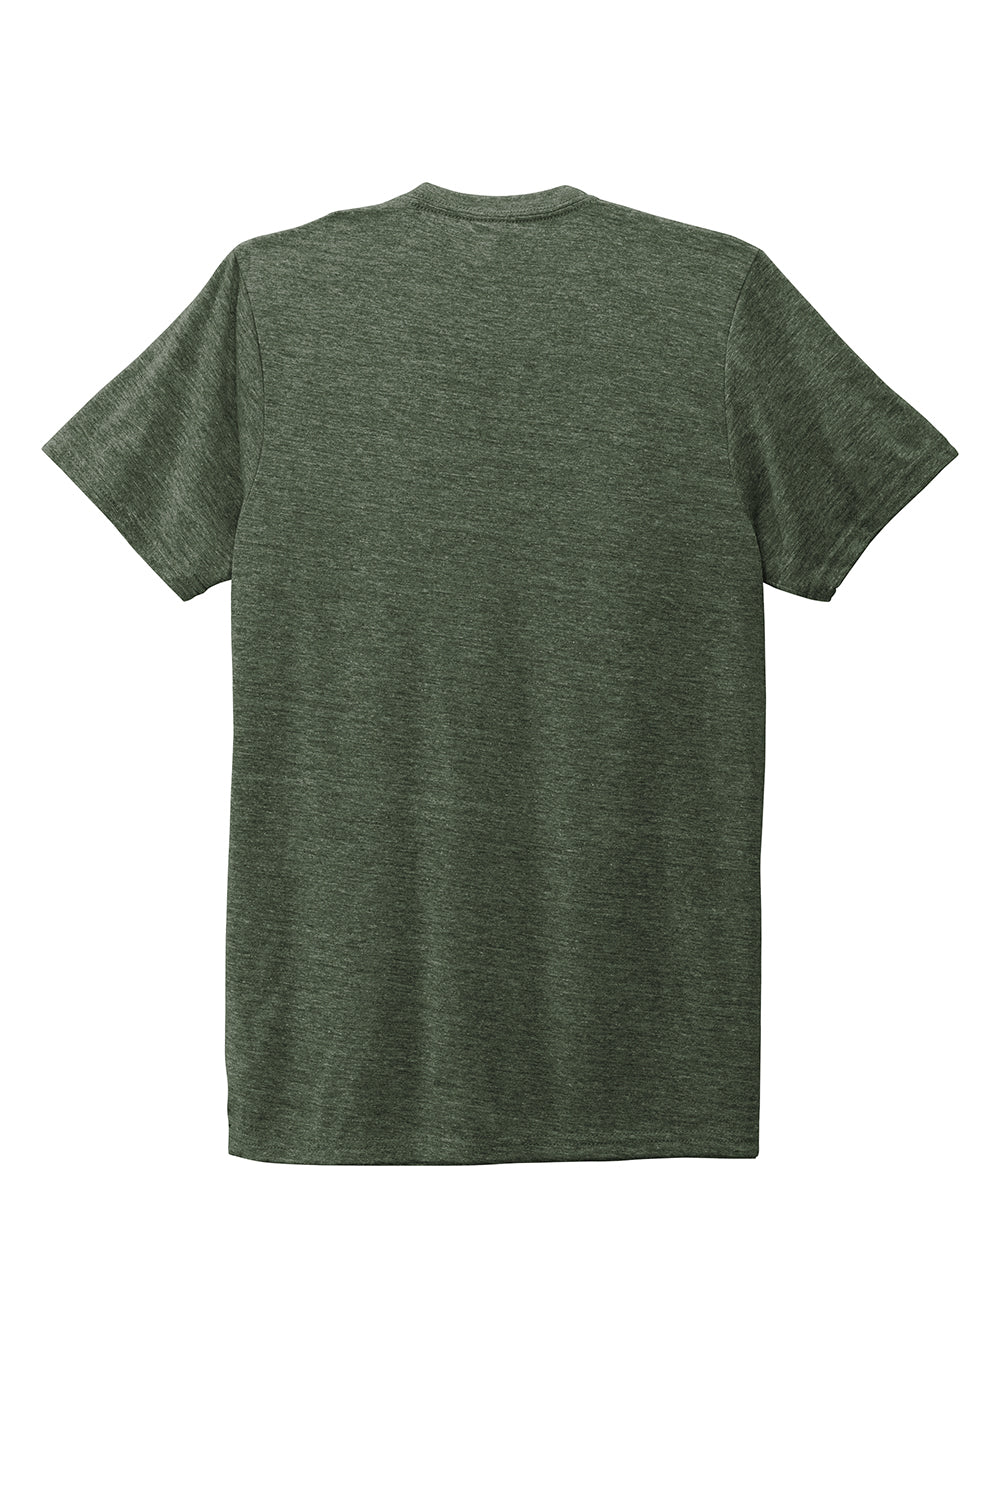 Allmade AL2004 Mens Short Sleeve Crewneck T-Shirt Herb Green Flat Back